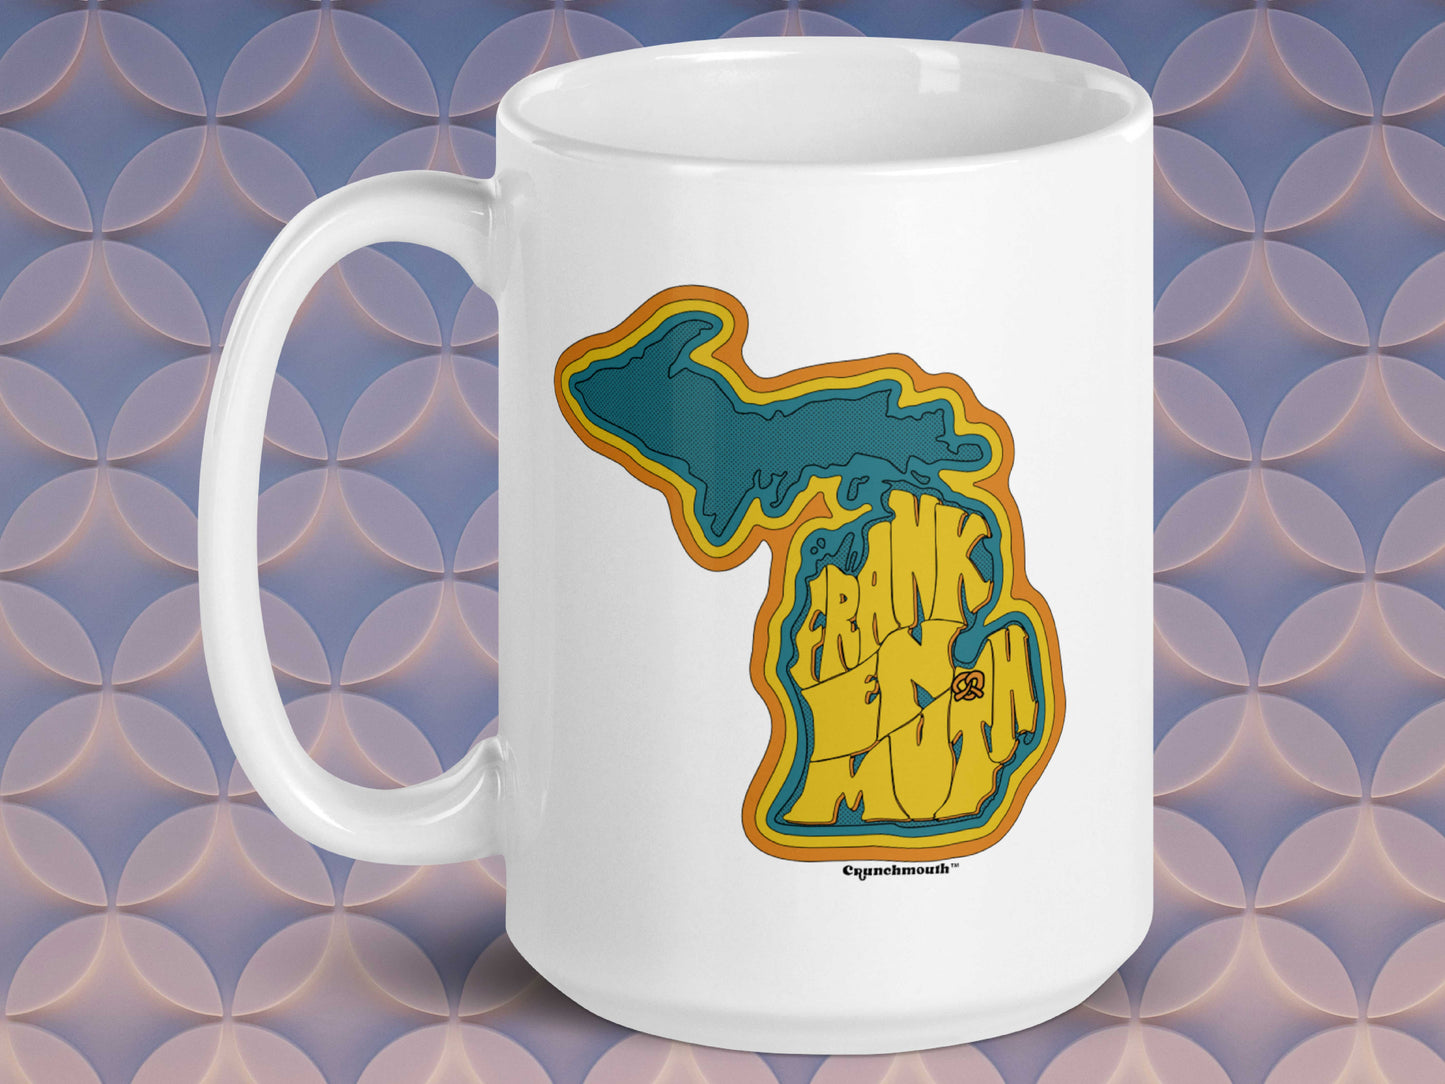 frankenmuth coffee mug, 15oz, handle on left, geometric pattern background